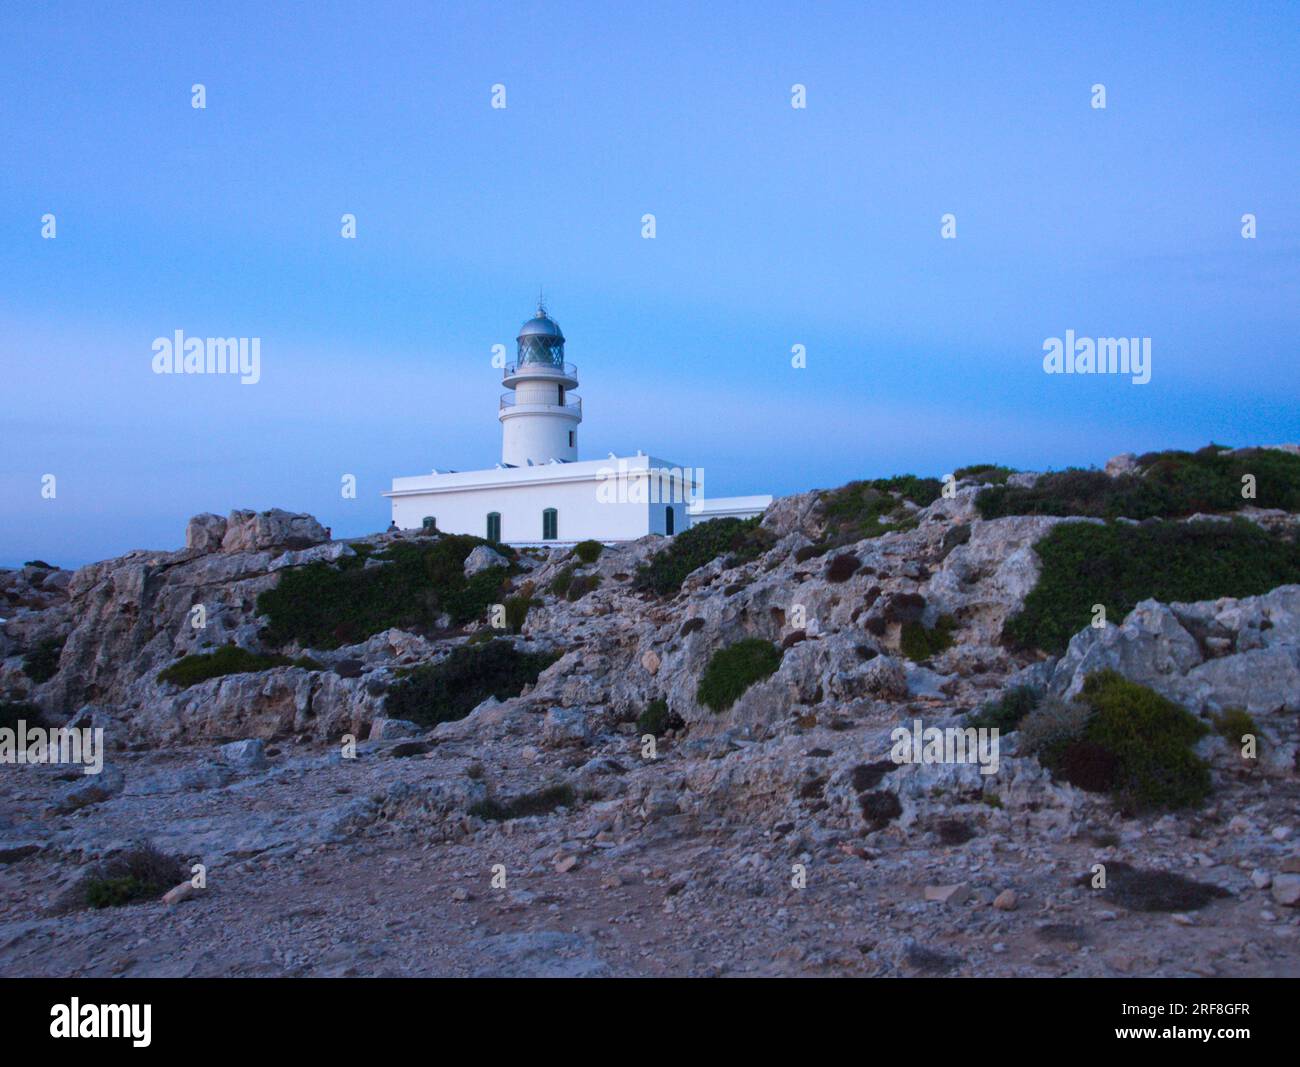 A lighthouse on the Island of Menorca surrounded by stony ground.  Un faro de la Isla de Menorca  rodeado de un terreno pedregoso. Stock Photo